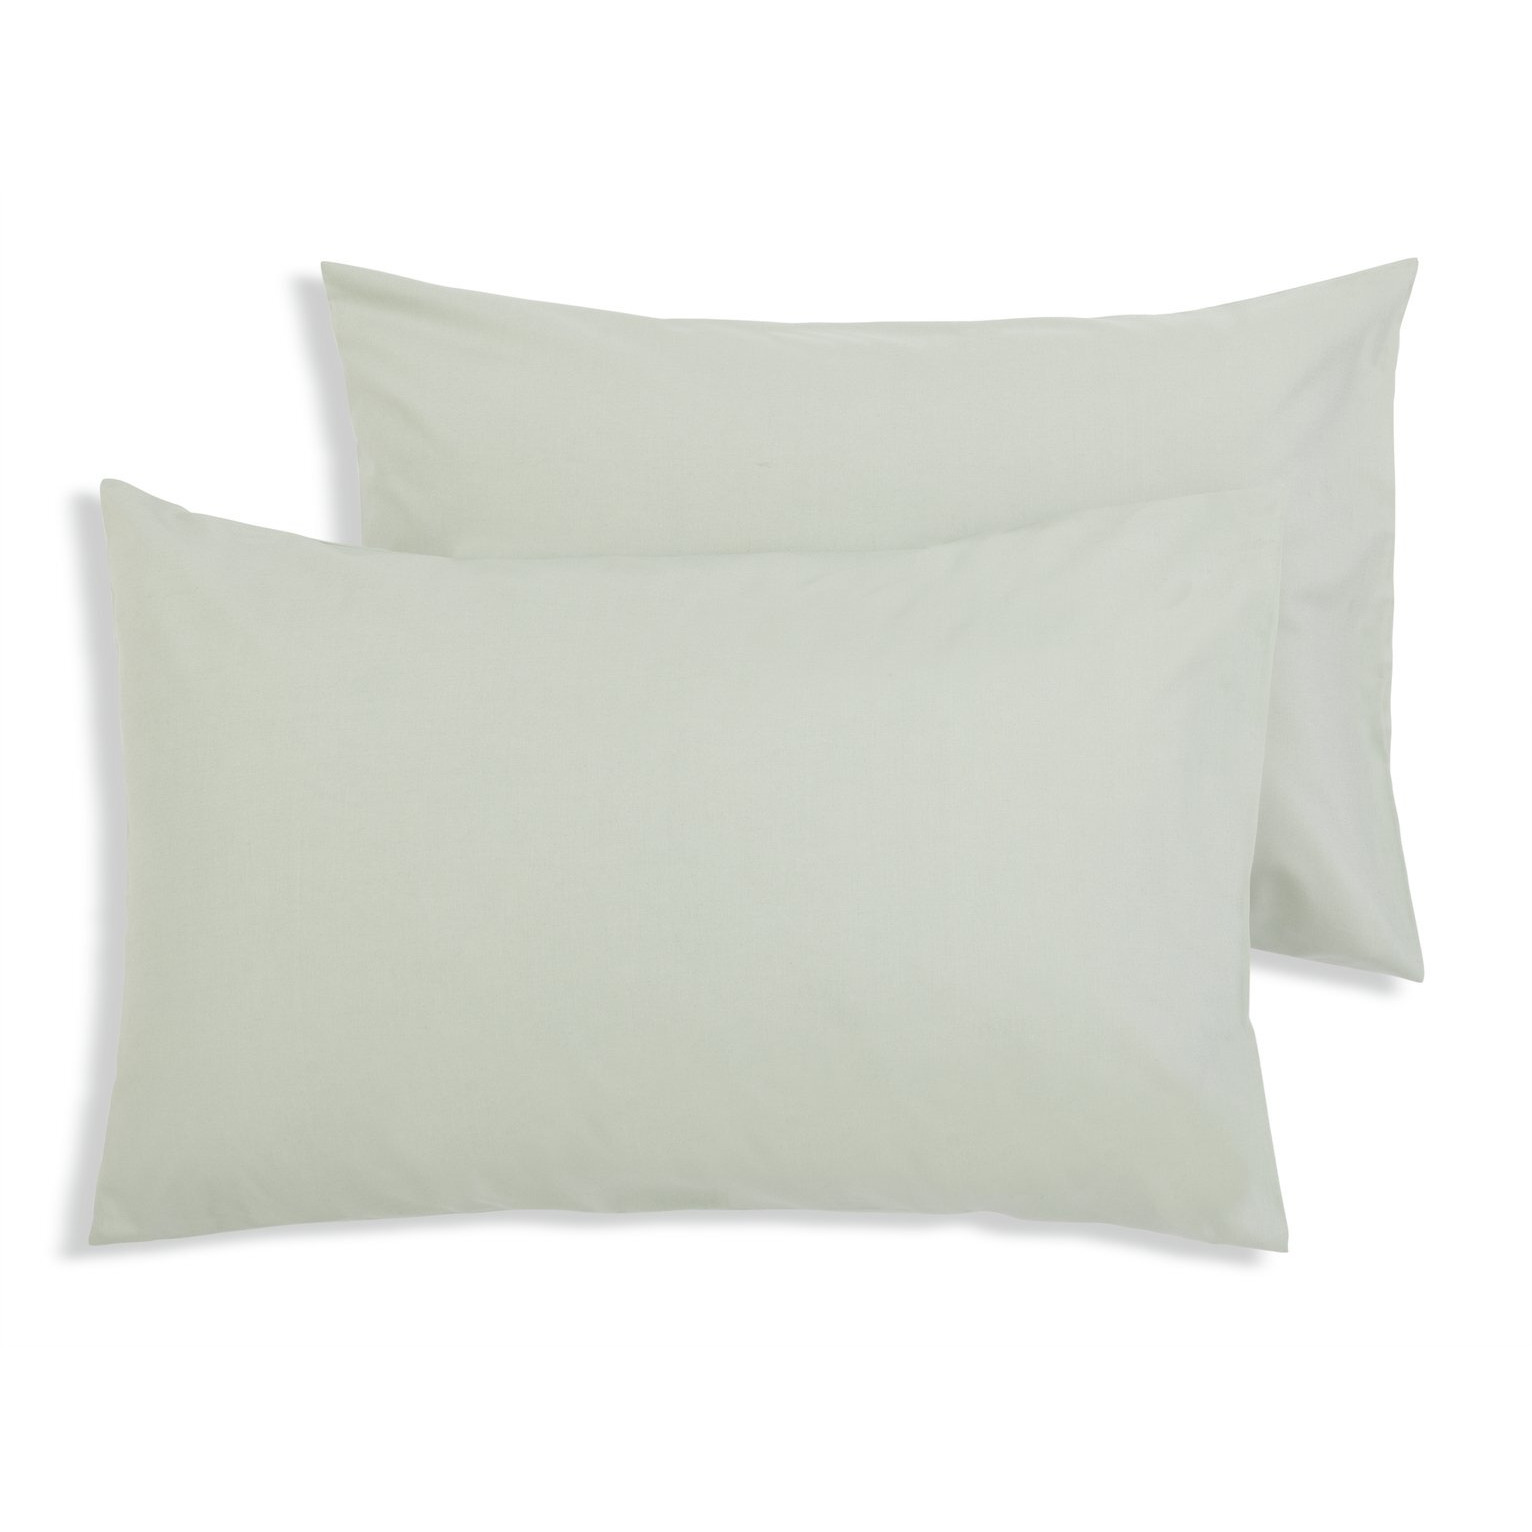 Habitat Polycotton Standard Pillowcase Pair - Sage Green - image 1